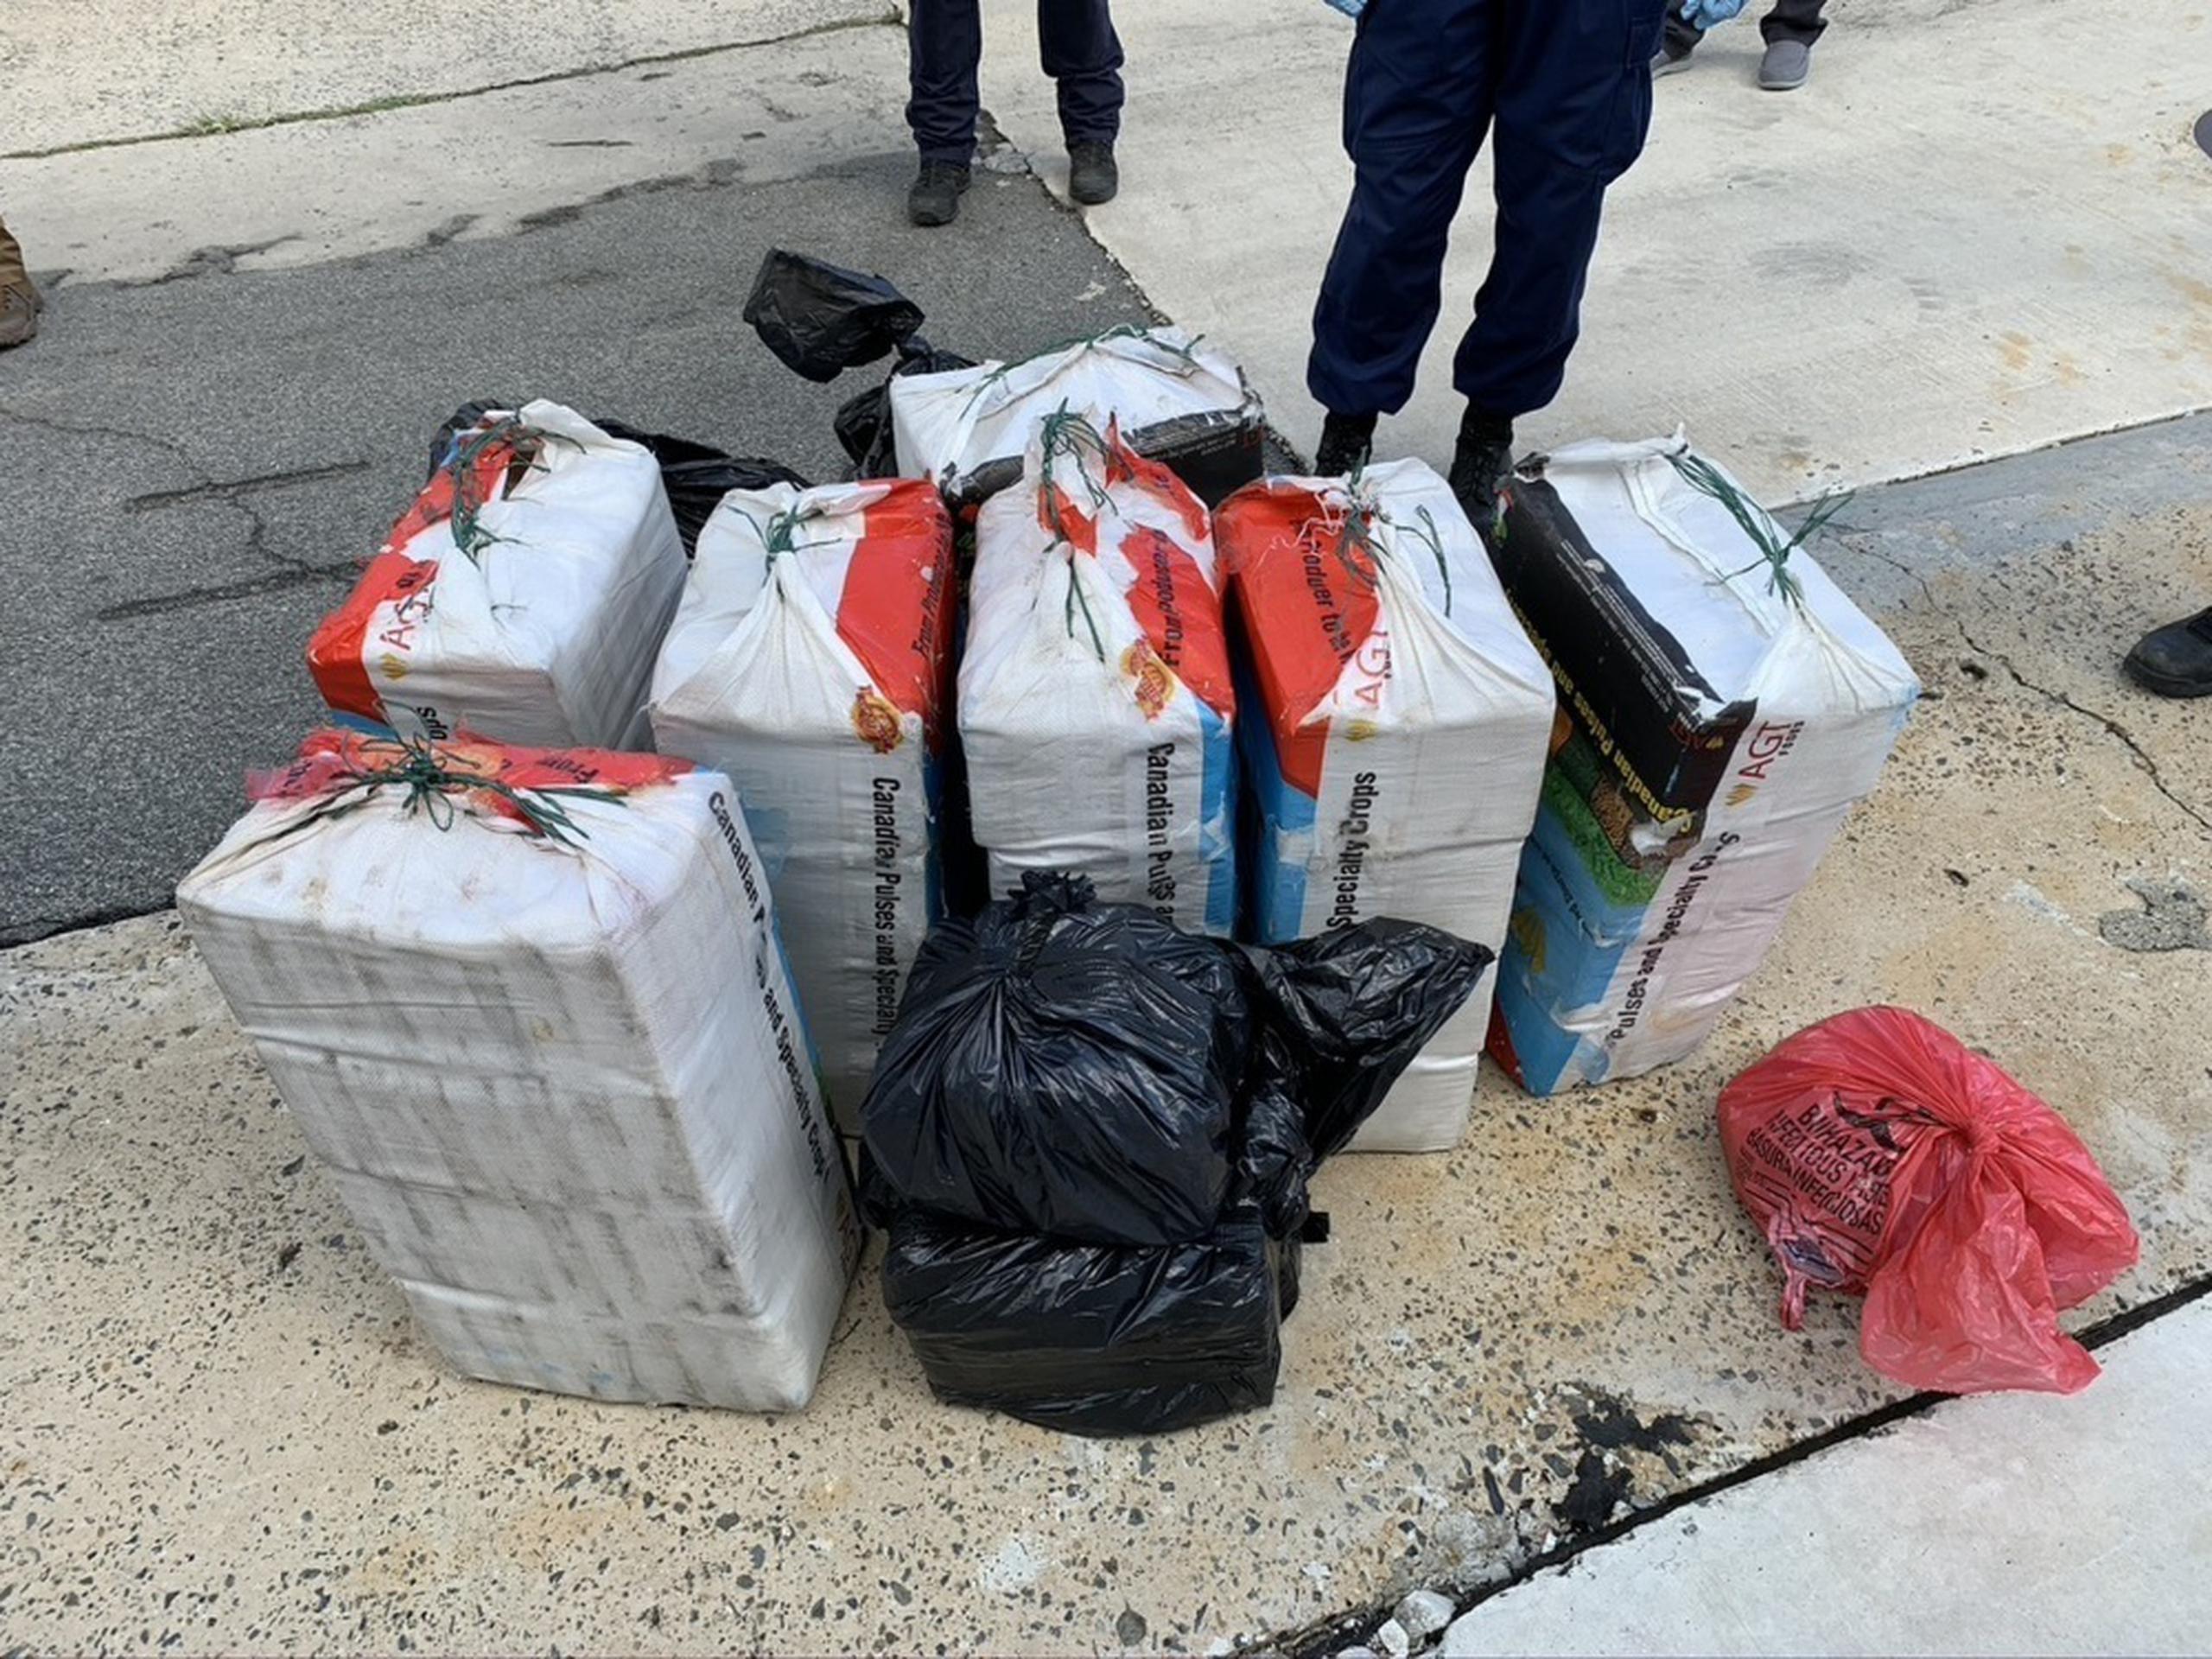 La Guardia Costera confiscó ocho fardos de presunto contrabando, que dieron positivo a cocaína.